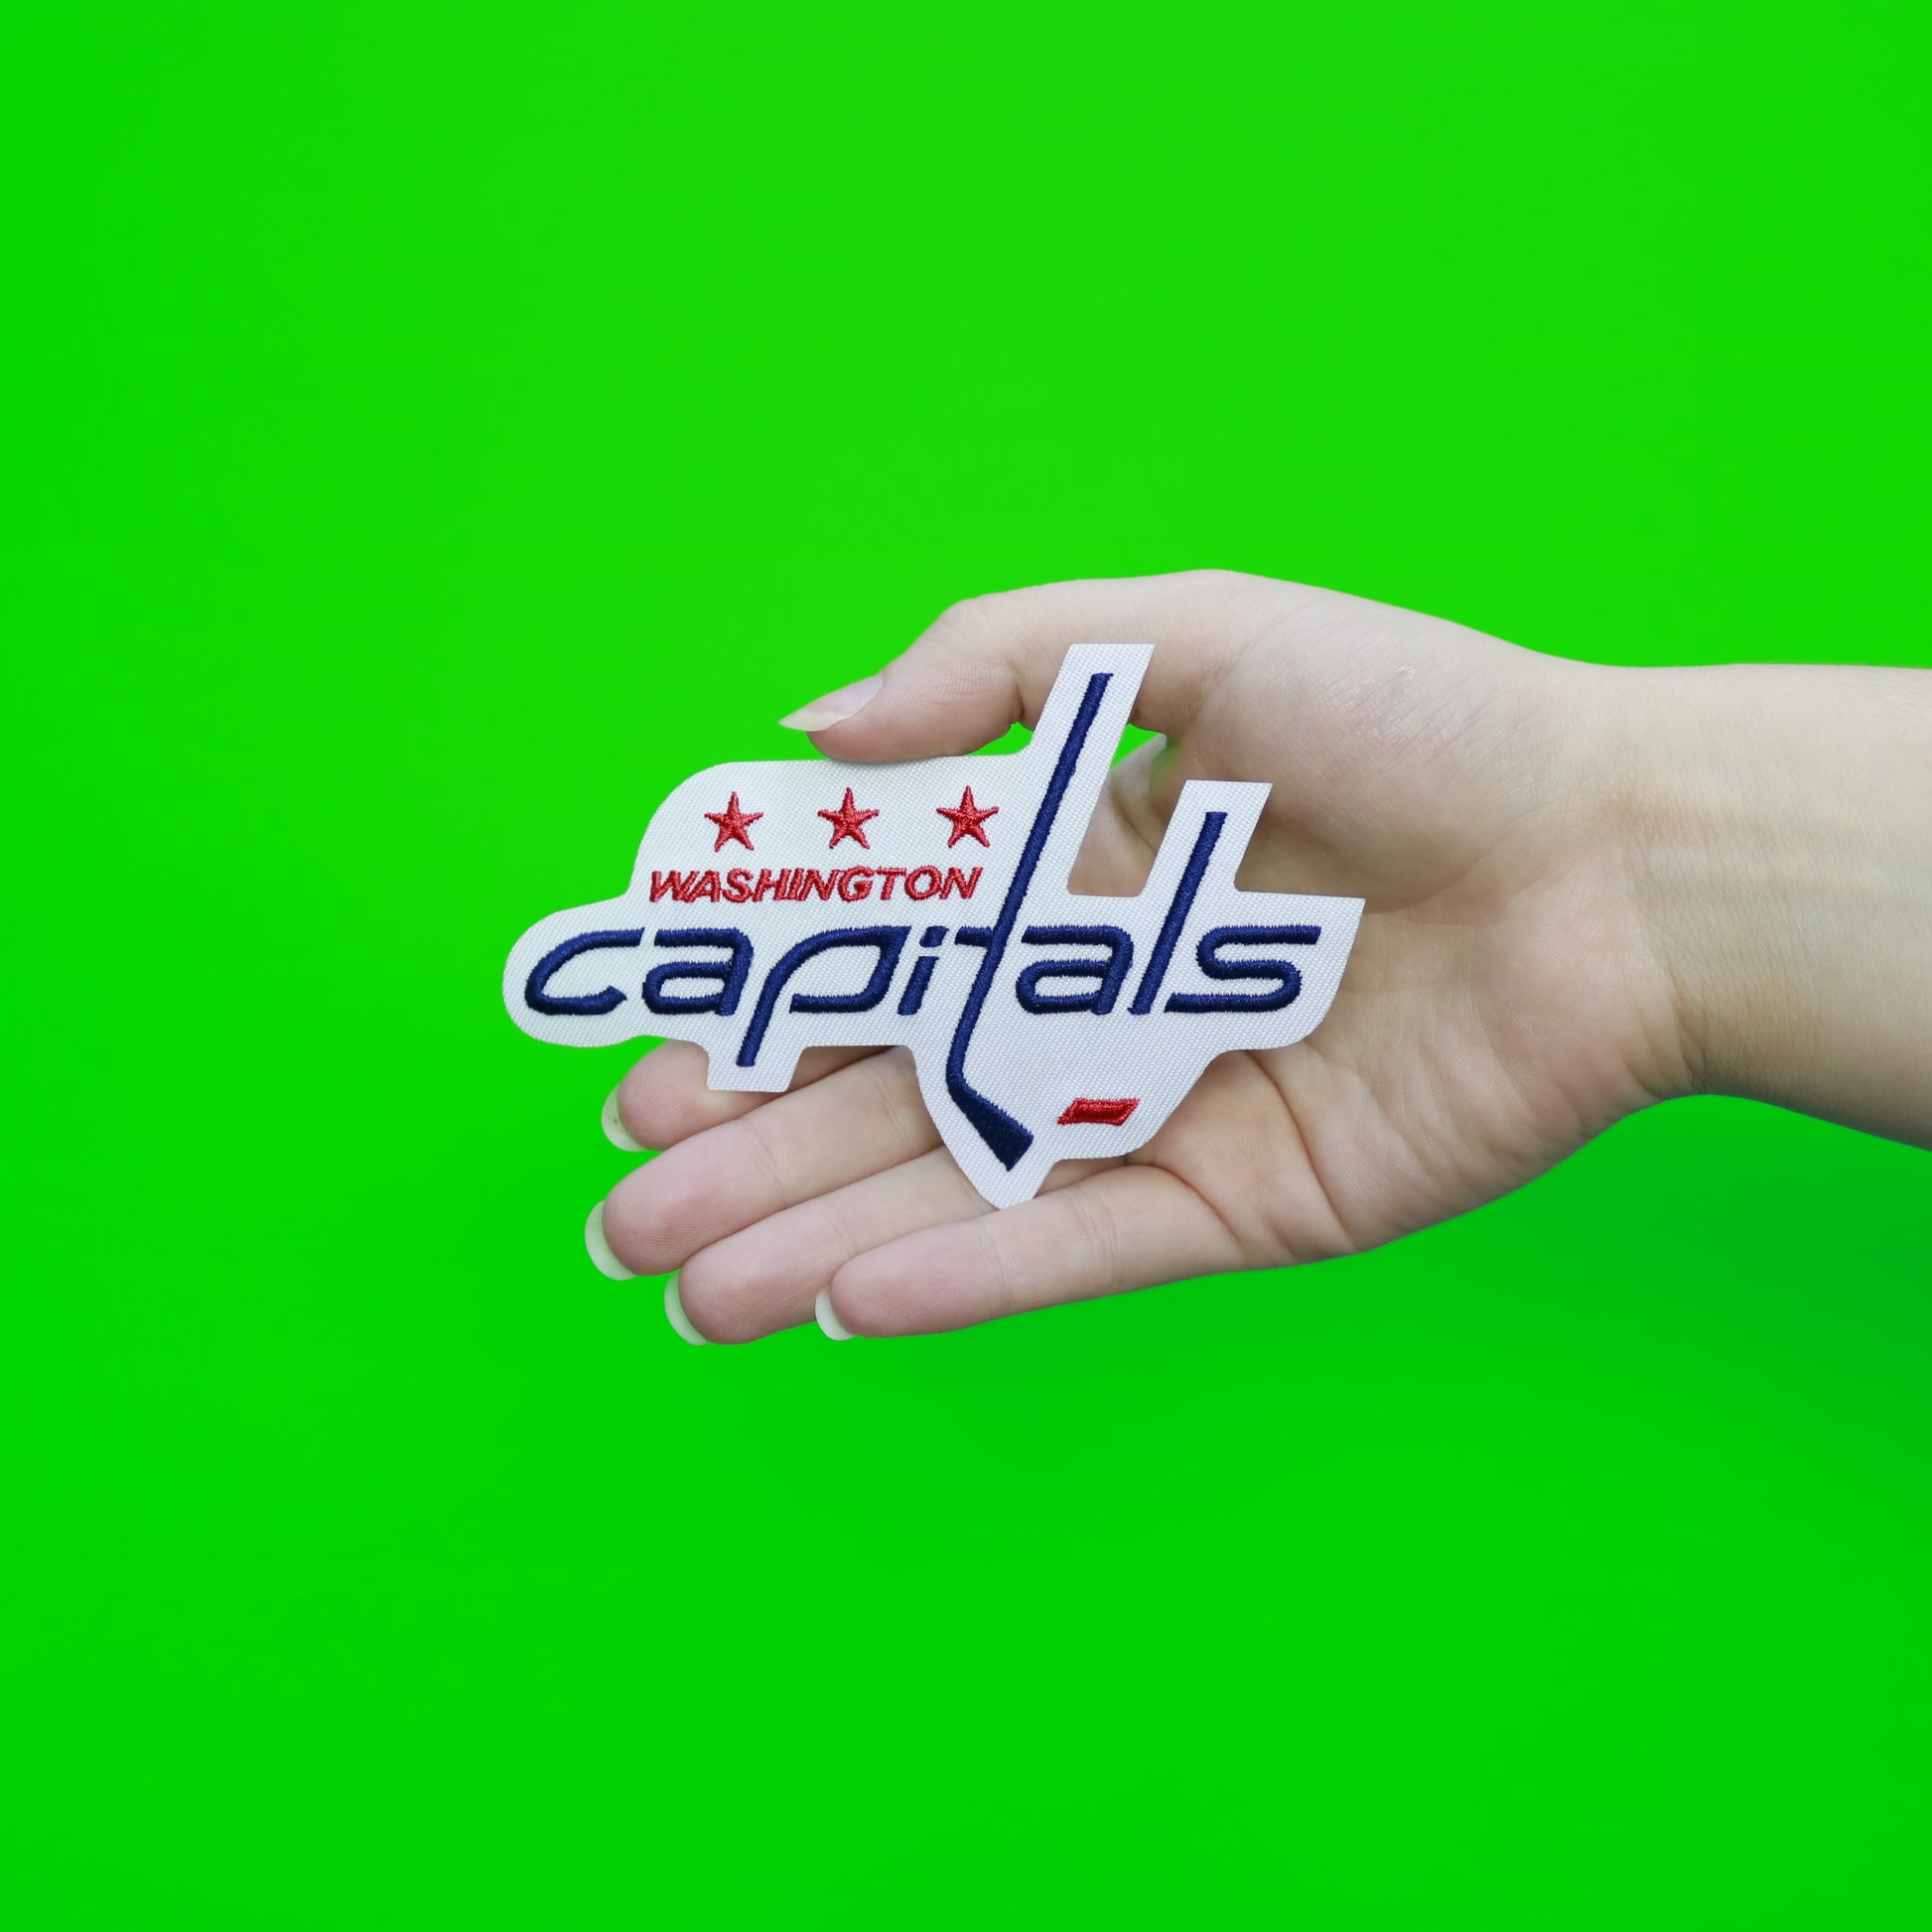 Washington Capitals Primary Team Logo Patch 